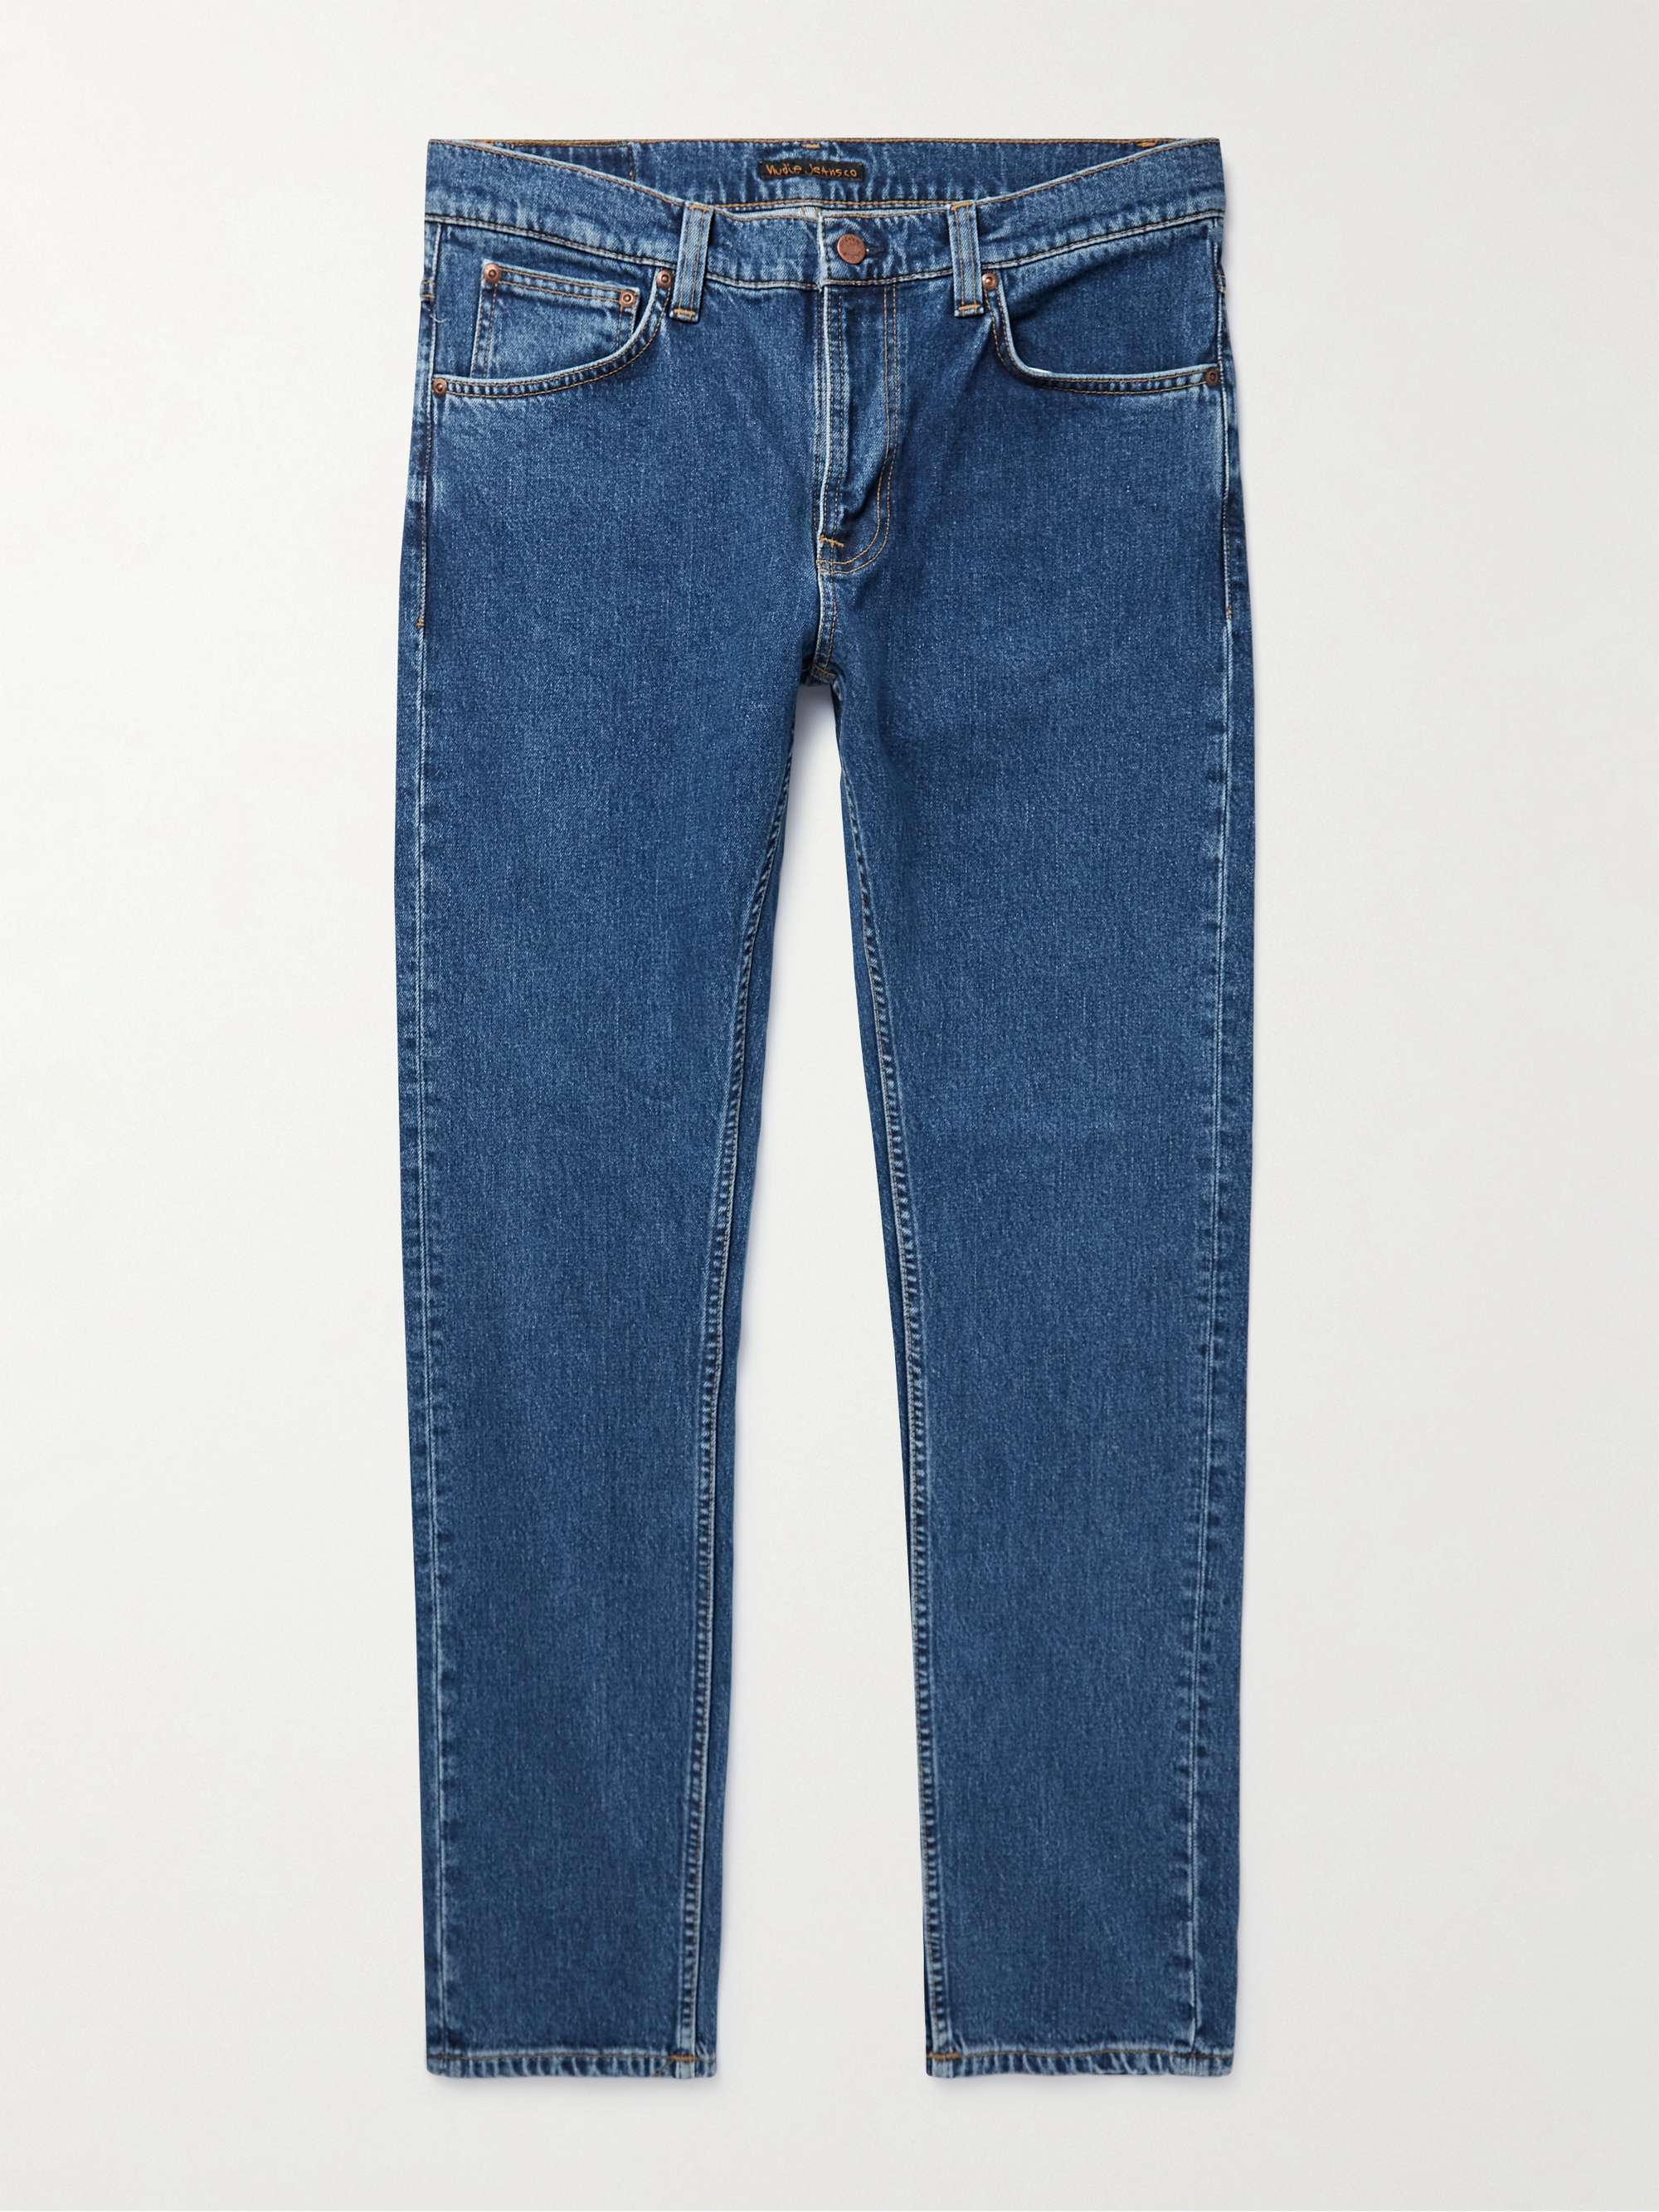 NUDIE JEANS Lean Dean Slim-Fit Jeans for Men | MR PORTER